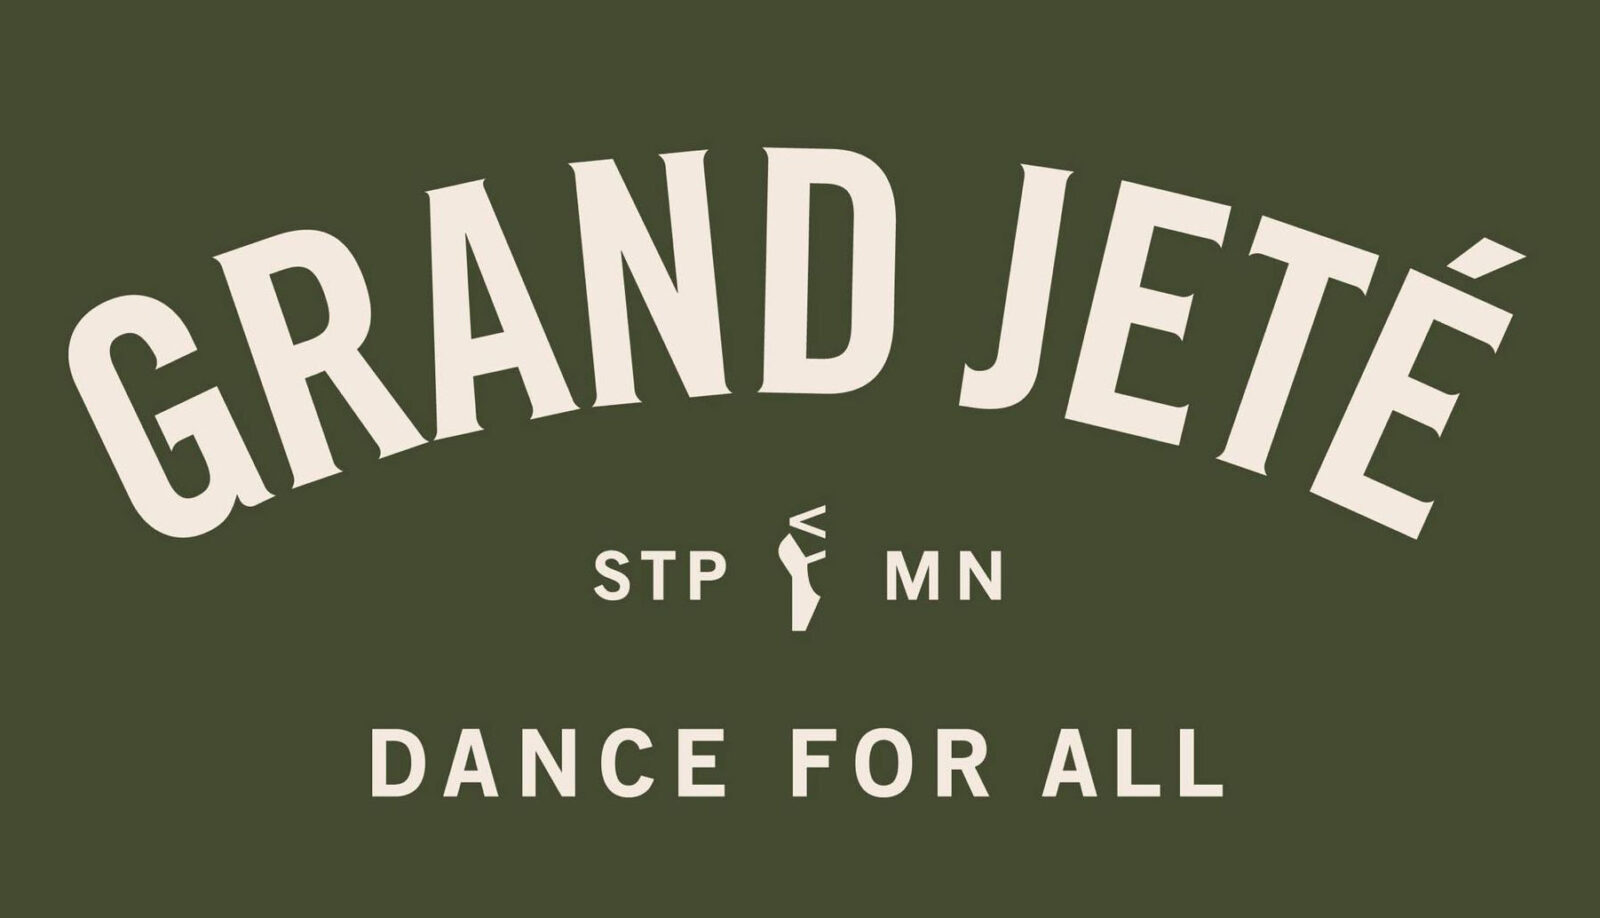 Grand Jete logo